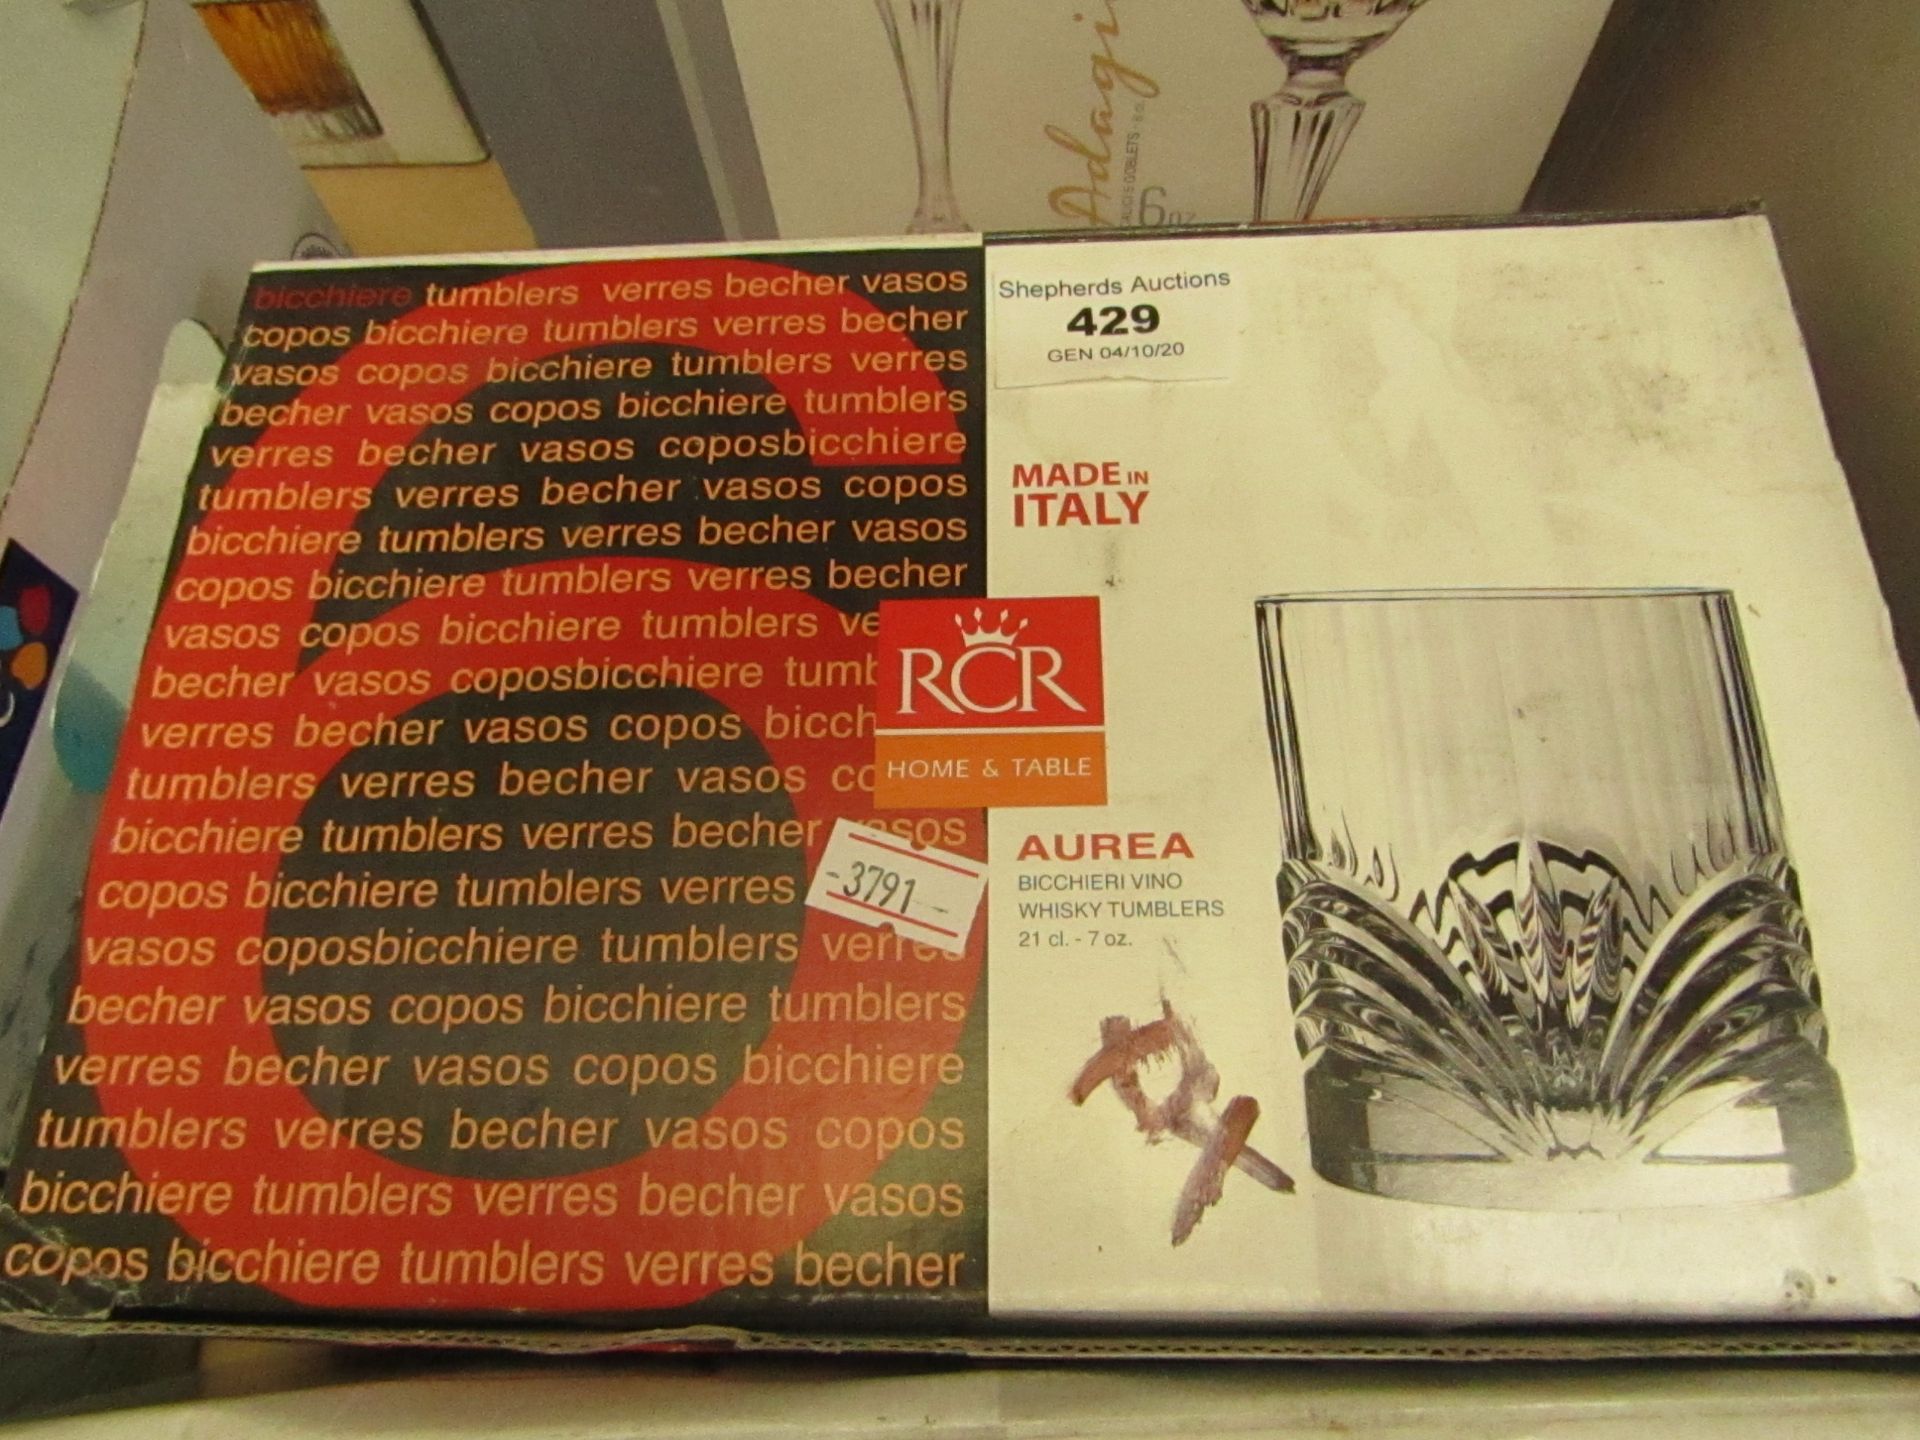 Box of 4x RCR Aurea cut glass whickey tumblers.